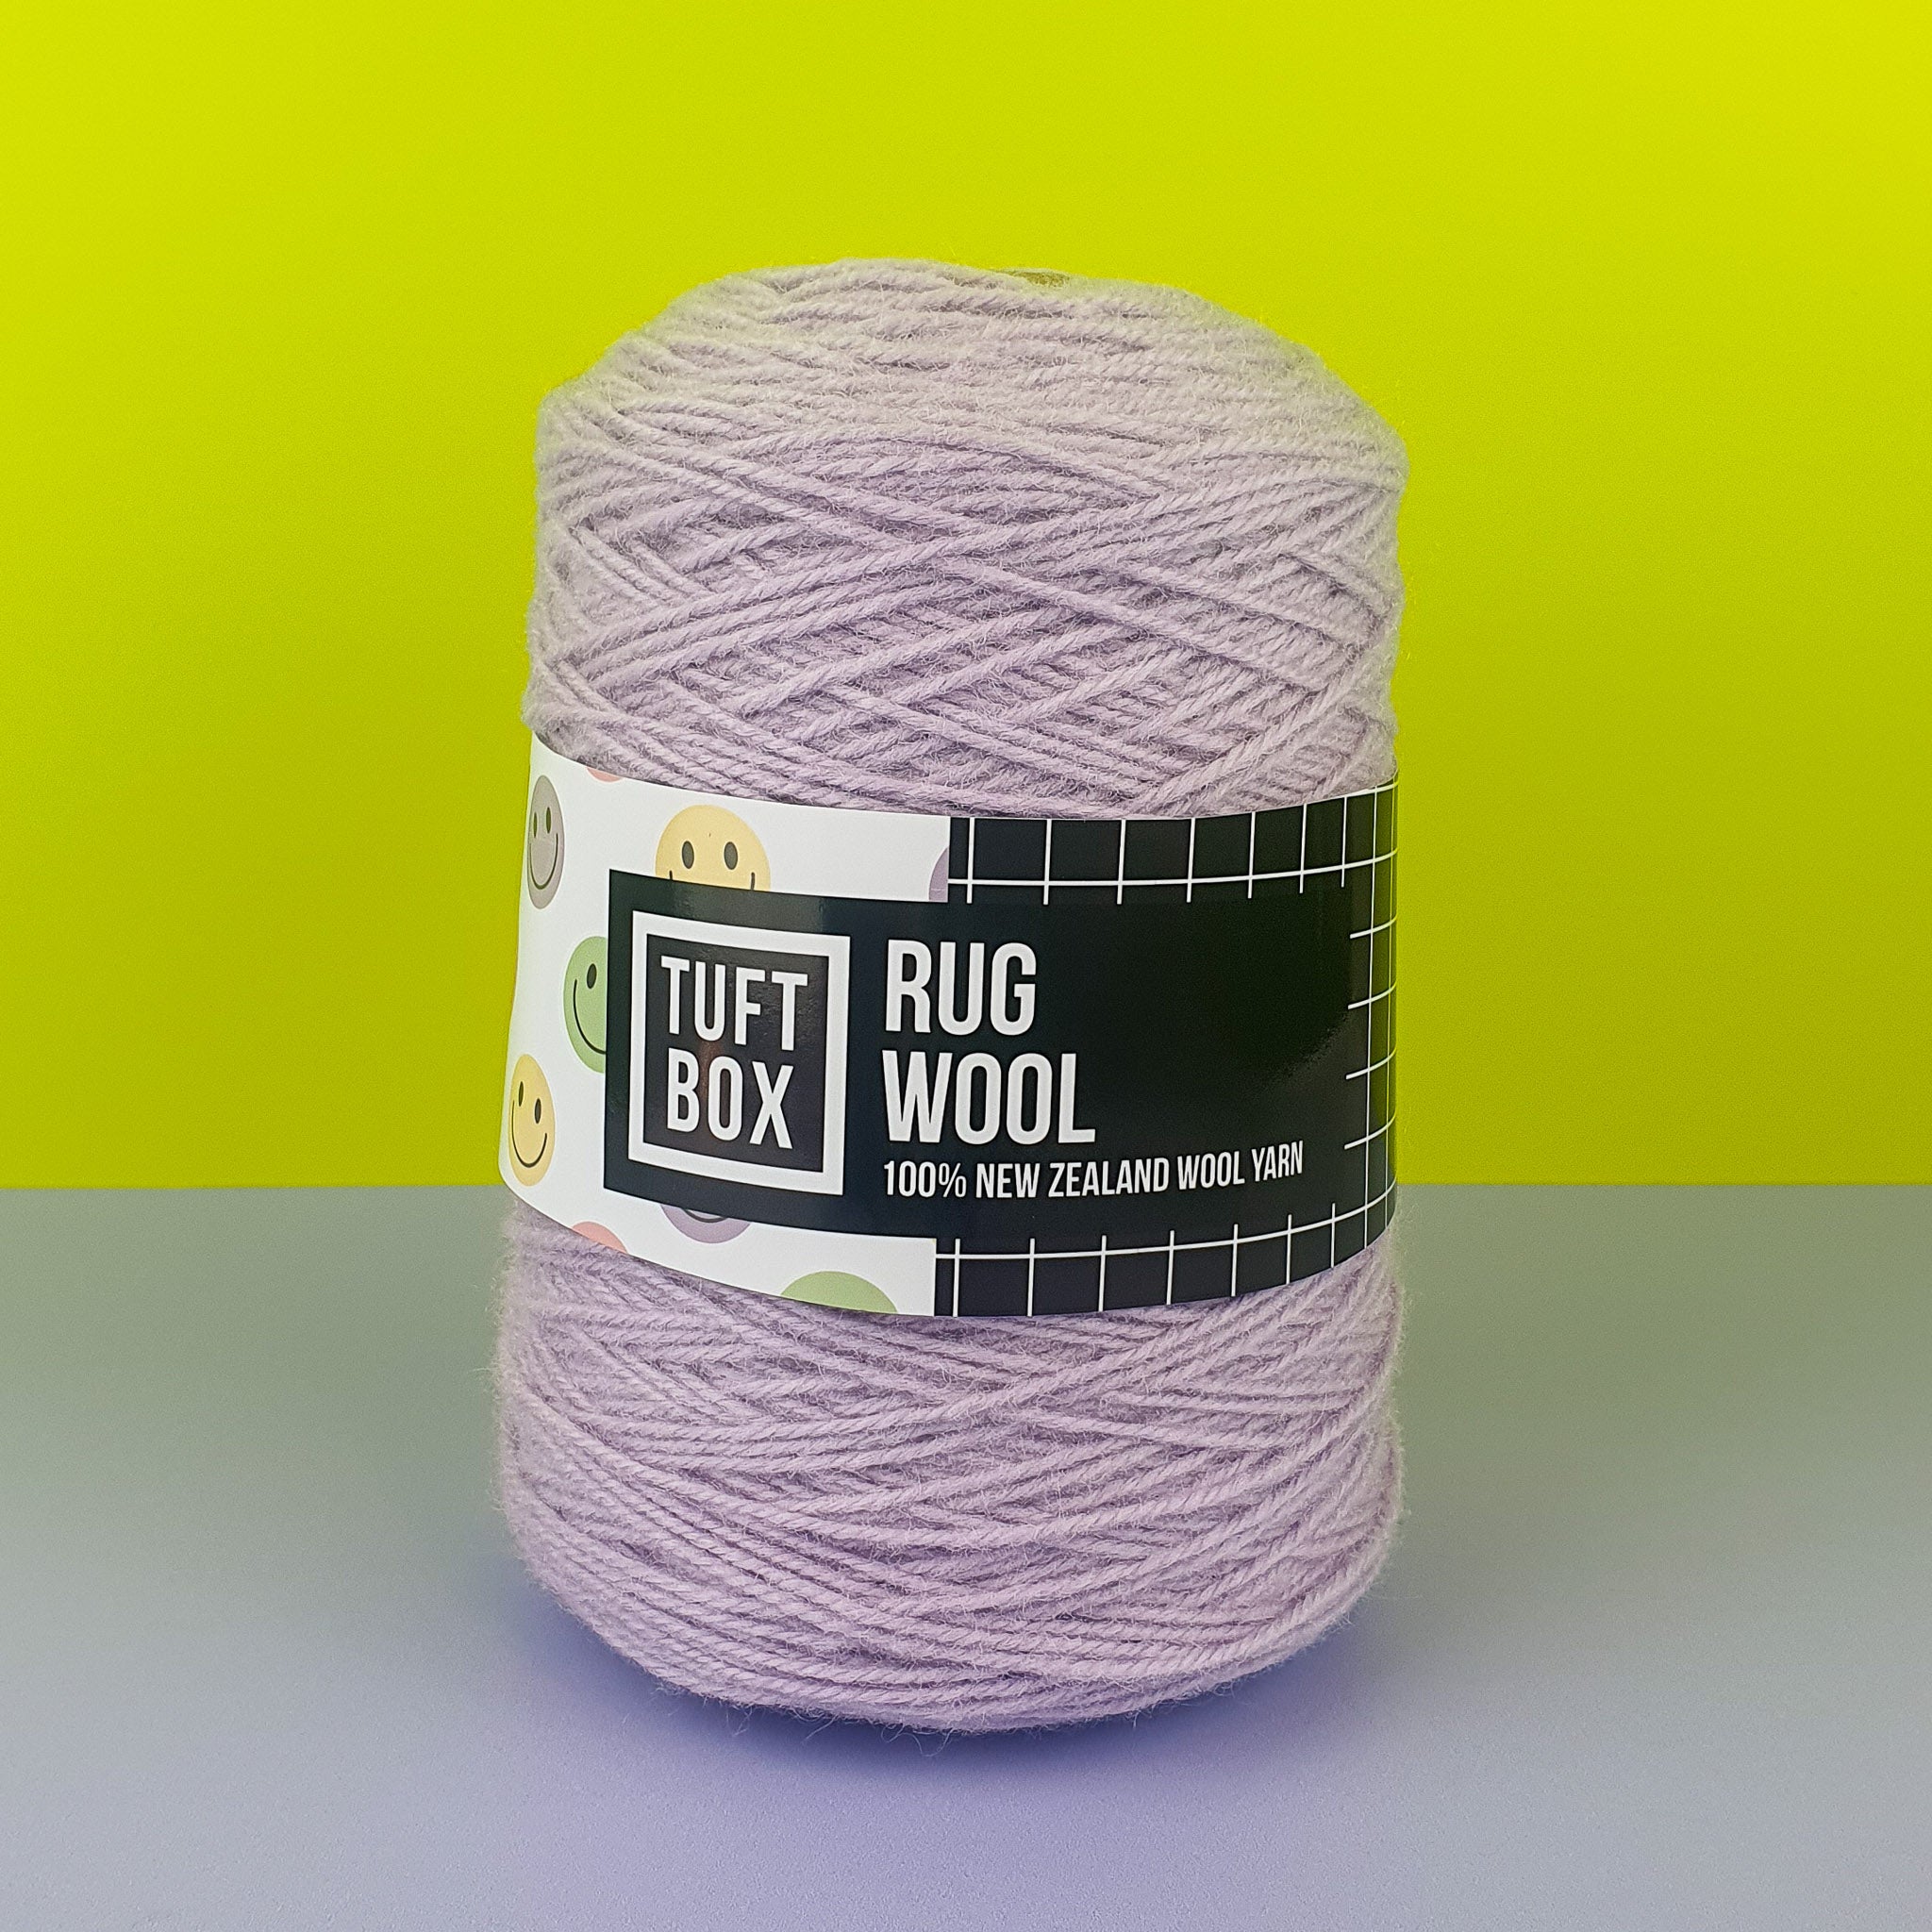 Tuftbox Rug Wool Cone Lilac